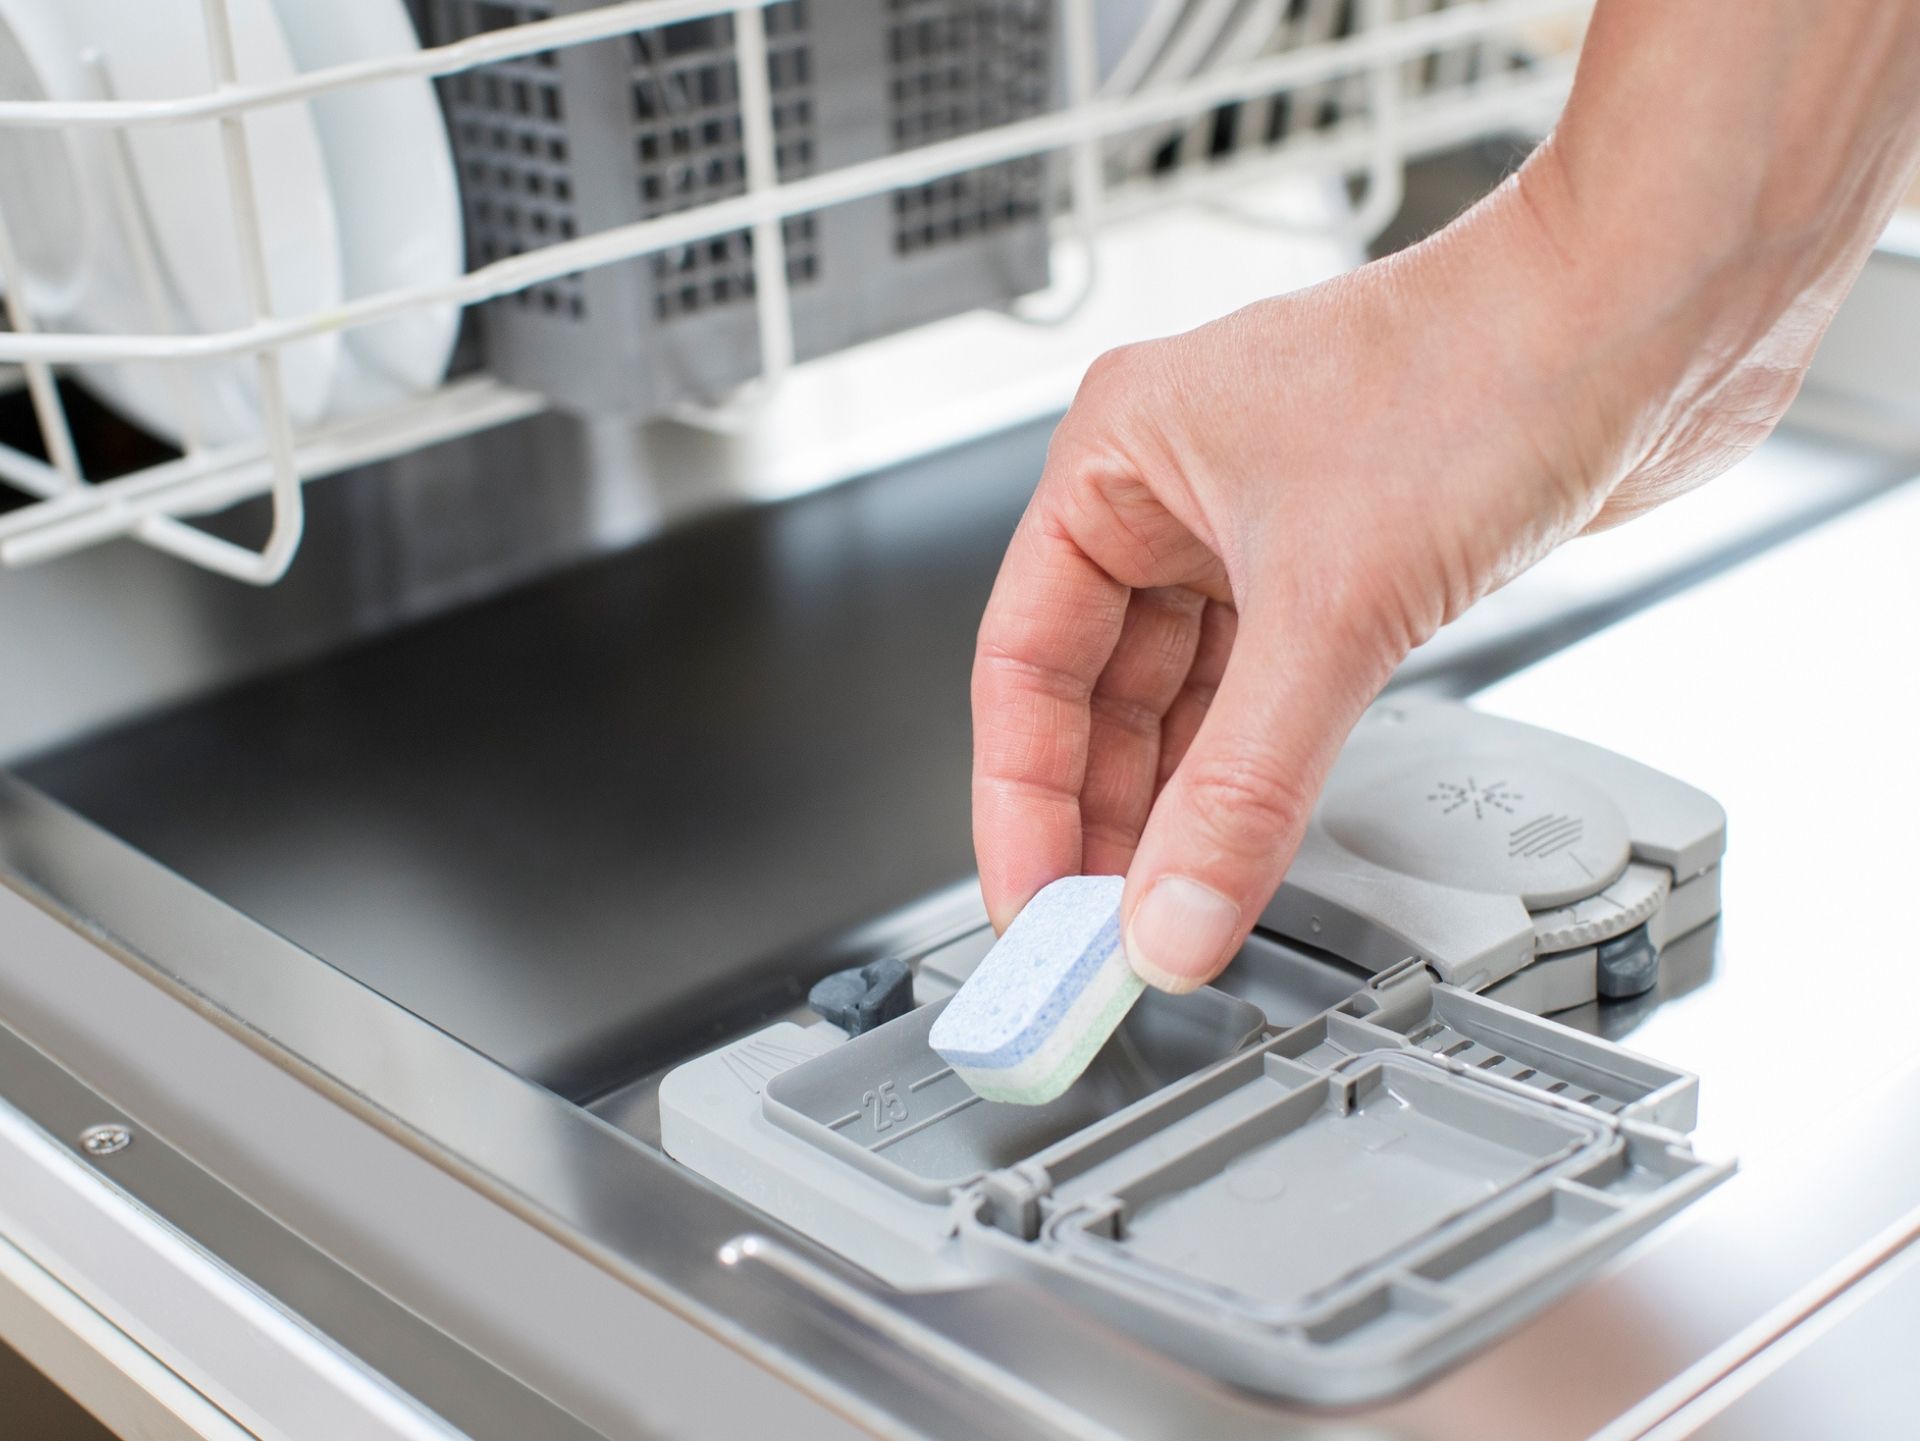 8 Best Ecover Dishwasher Tablets for 2023